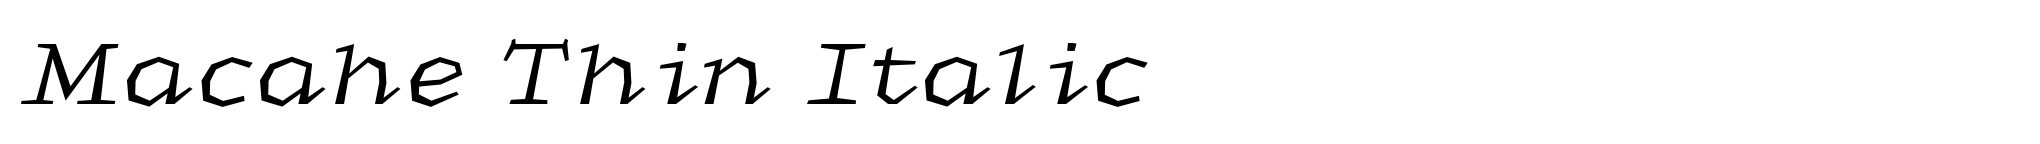 Macahe Thin Italic image